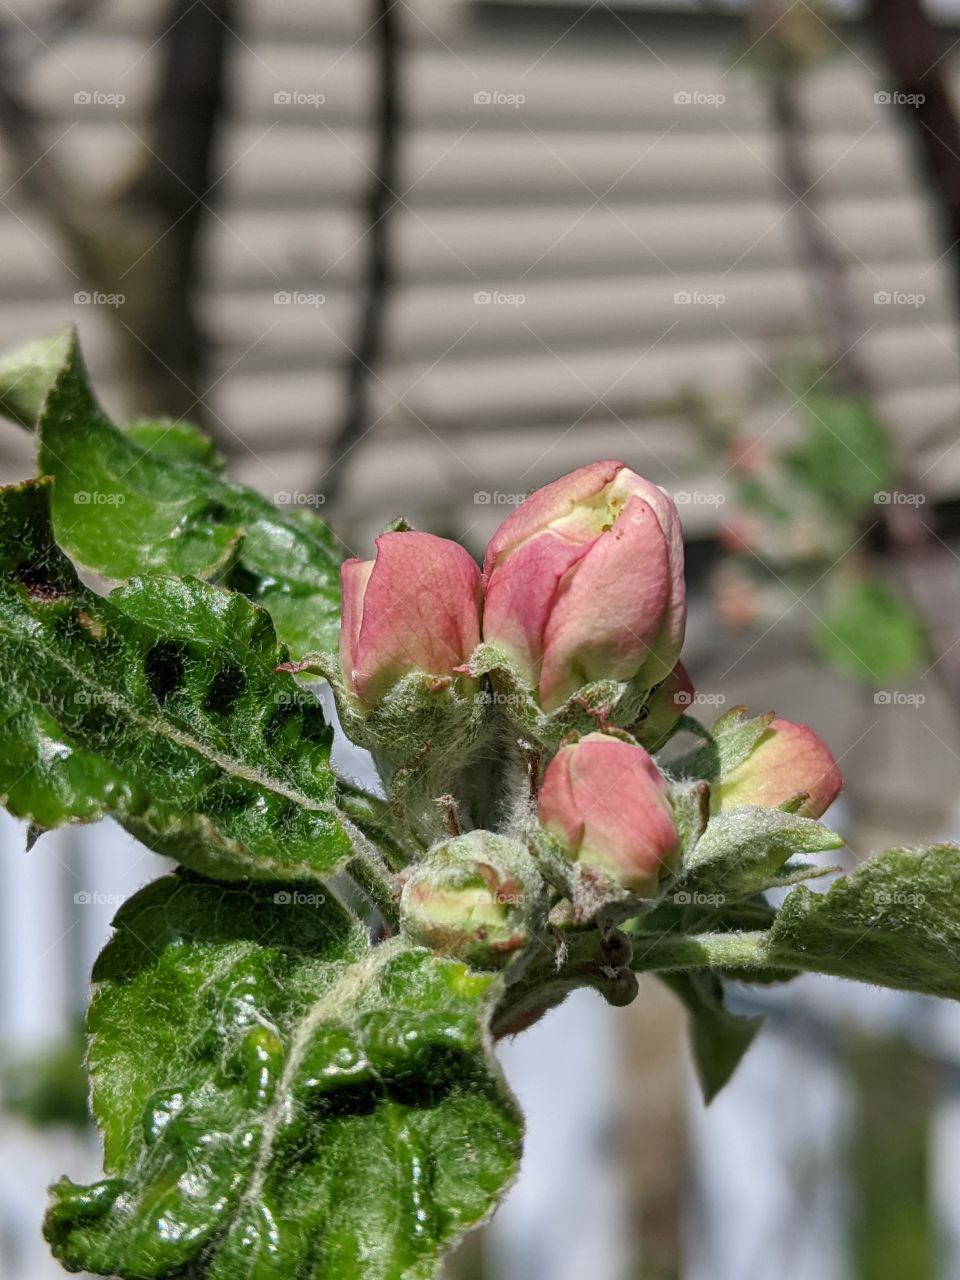 Apple tree flower buds